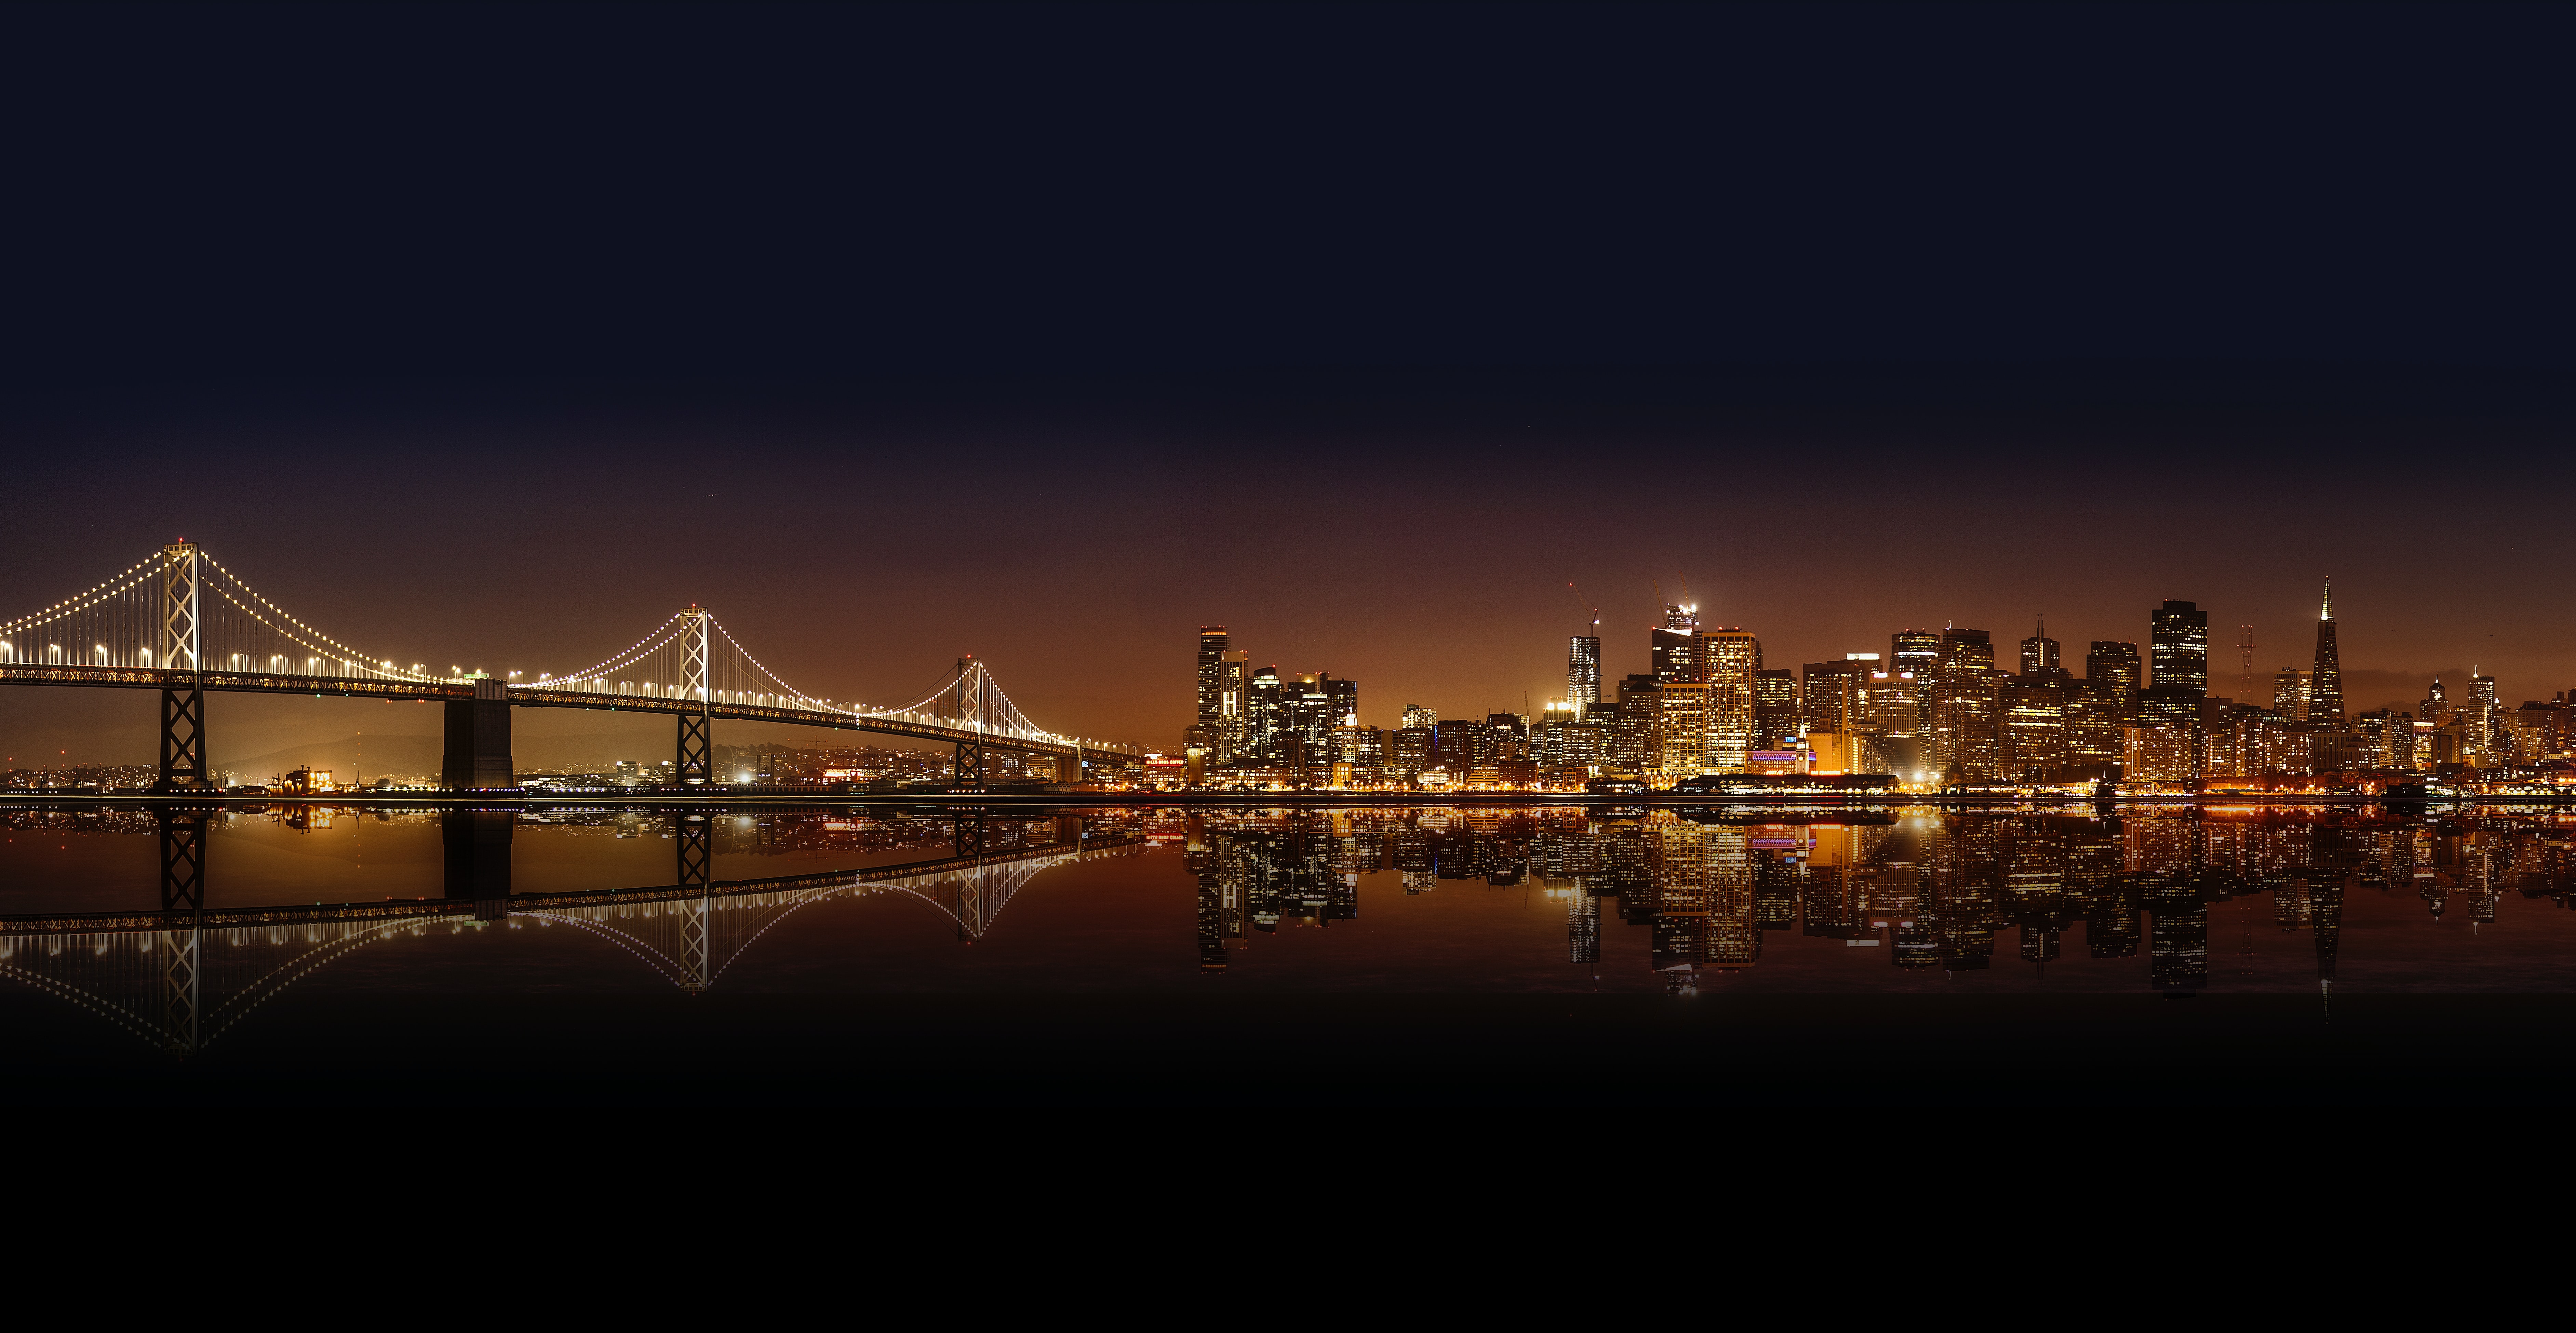 HD wallpaper, Cityscape, City Skyline, City Lights, 5K, Reflection, Body Of Water, San Francisco Oakland Bay Bridge, Night Time, 8K, Skyscrapers